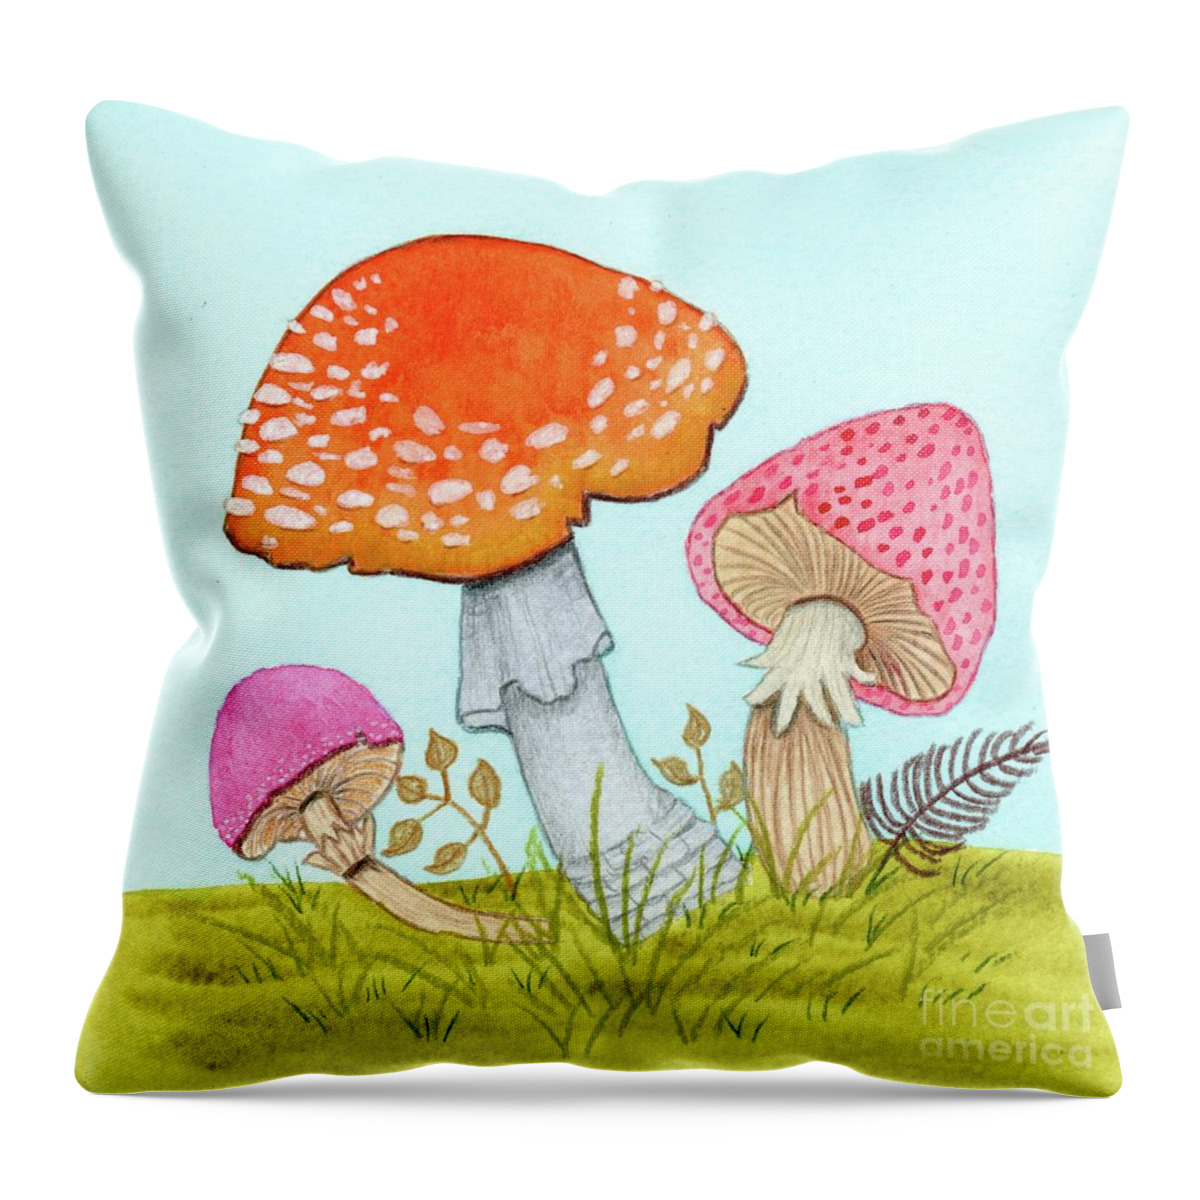 Retro Mushrooms Throw Pillow featuring the painting Retro Mushrooms 3 by Donna Mibus